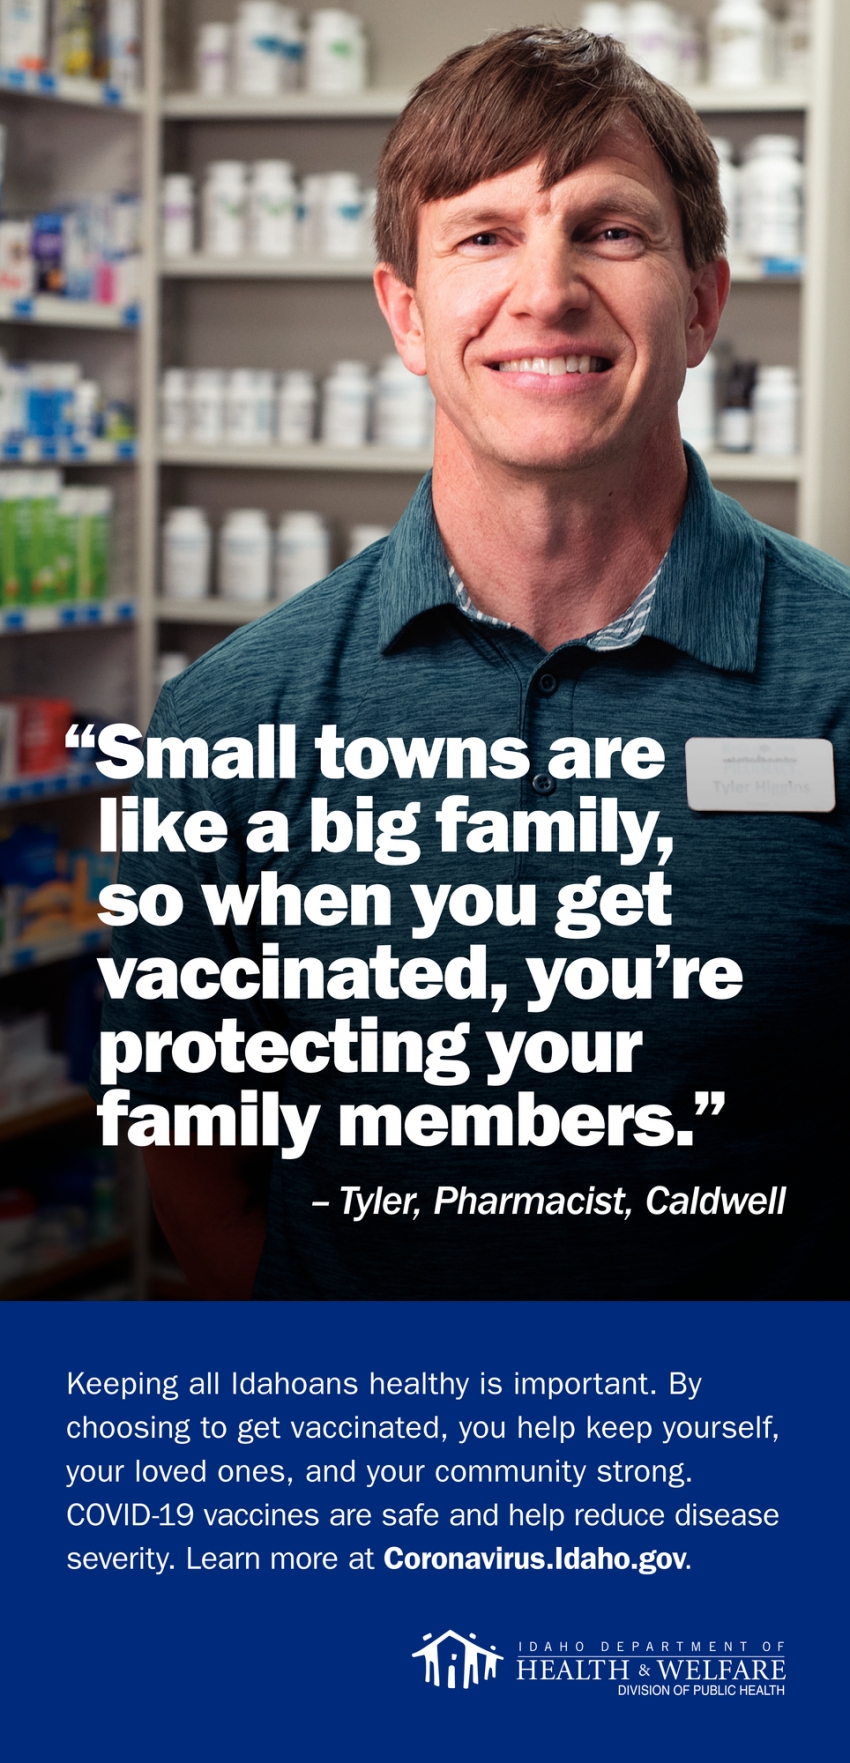 Tyler, Pharmacist, Caldwell